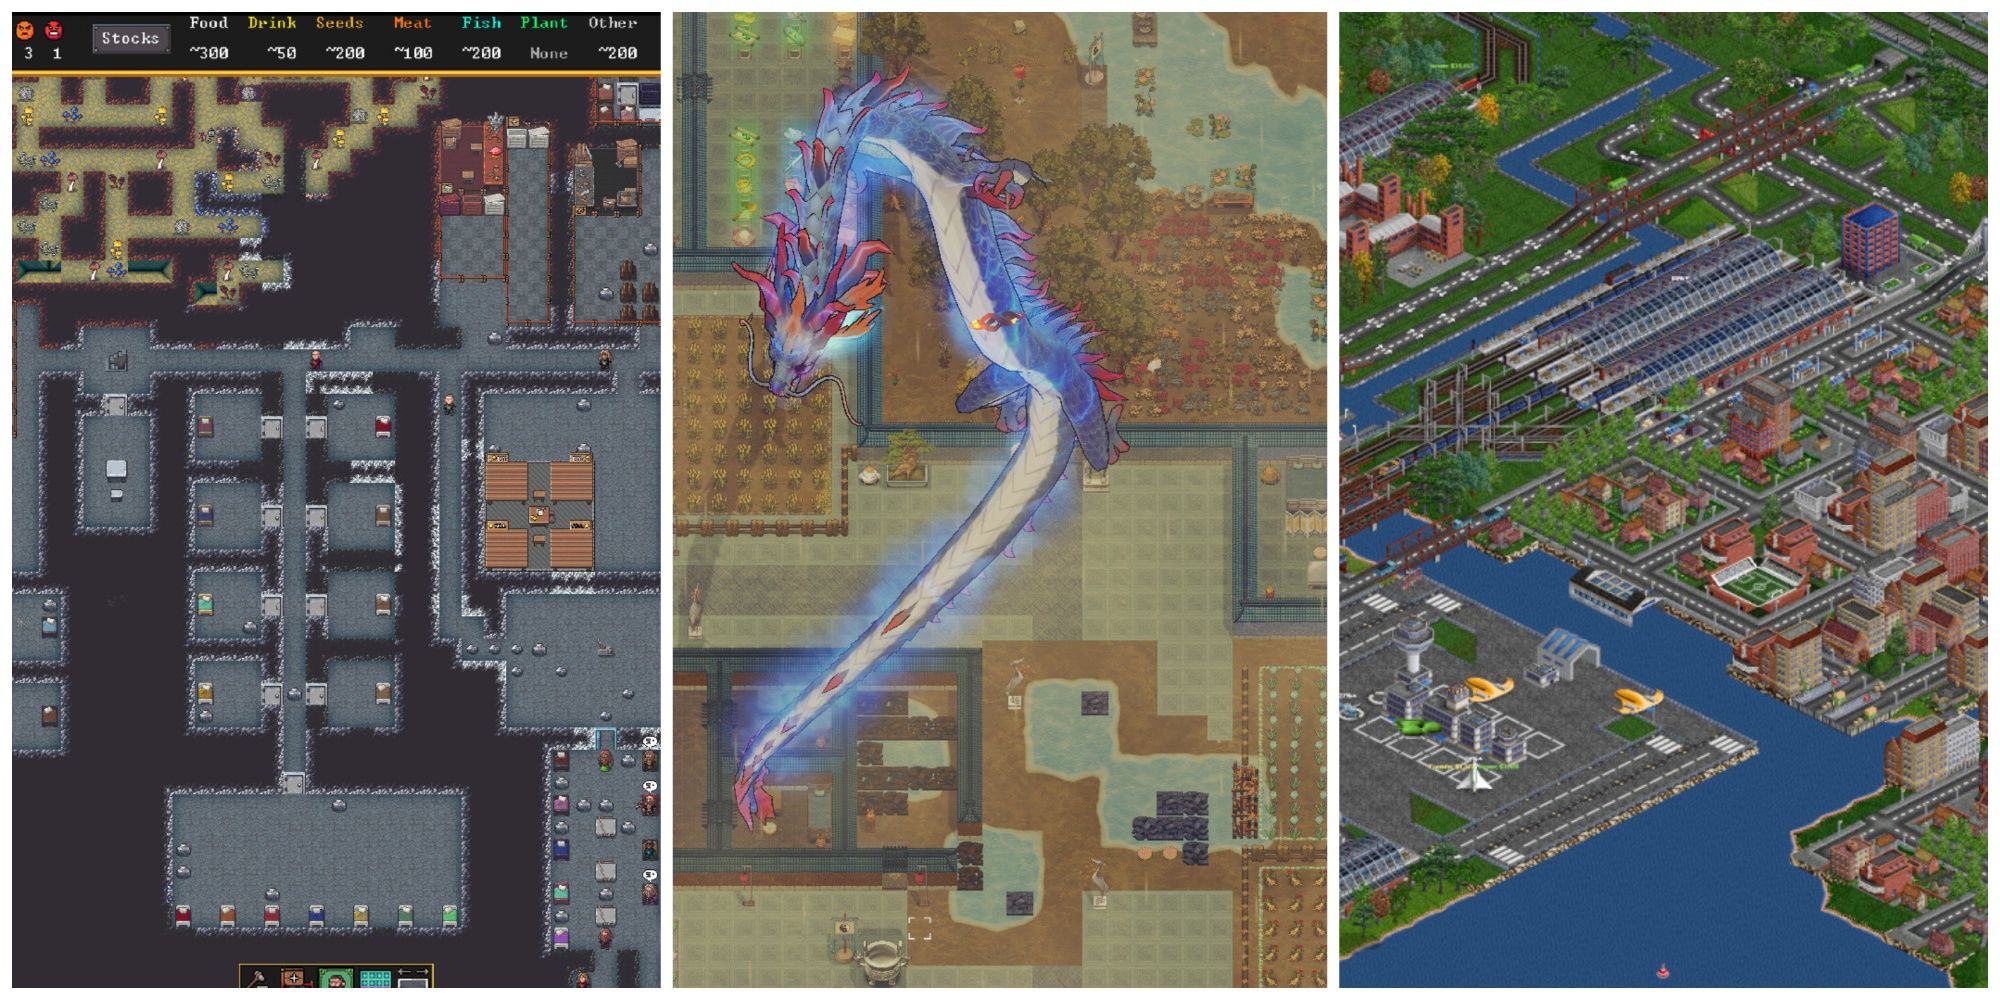 Complex Management Games Featured Image - various screenshots